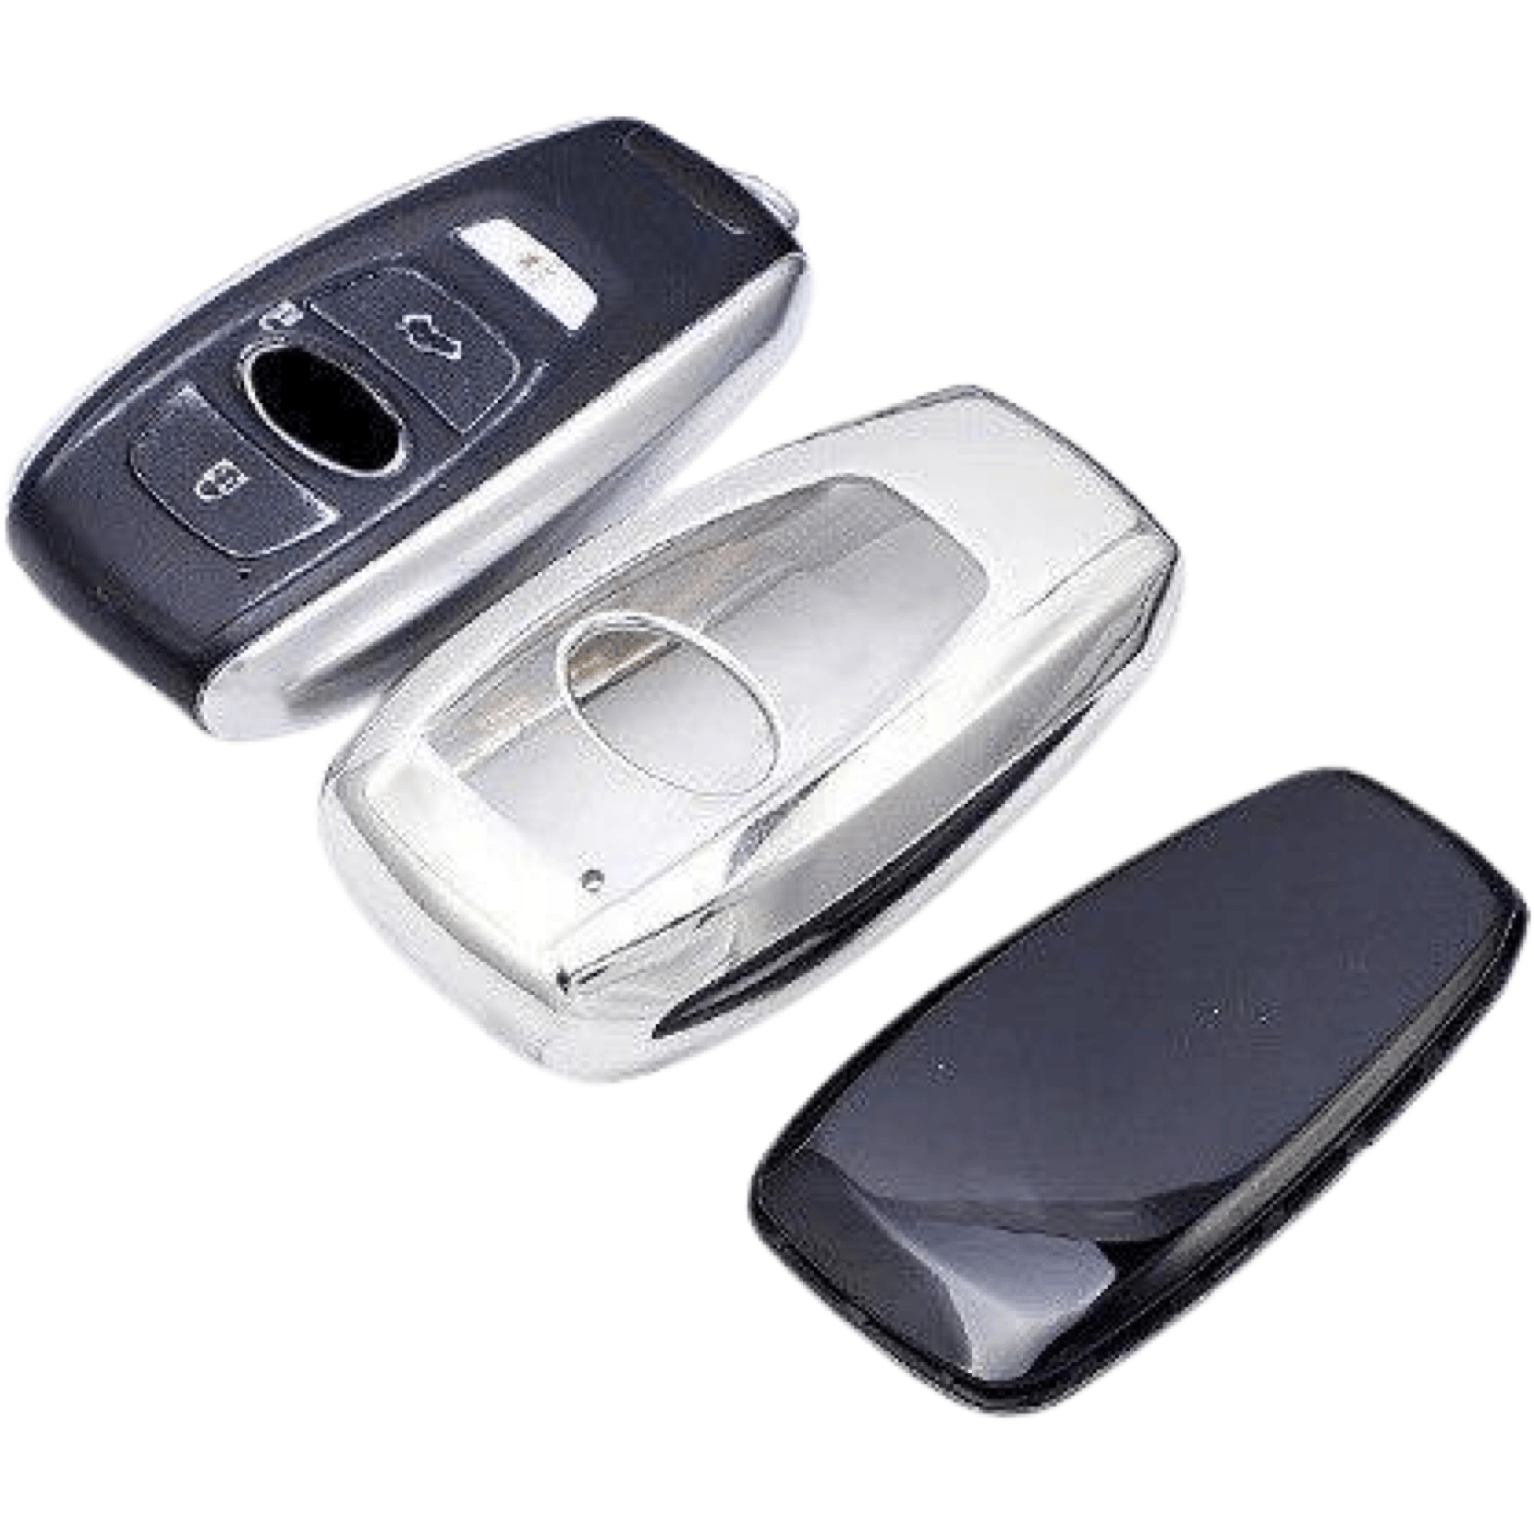 Subaru key cover | Impreza WRX STI, XV car key case (3 or 4 button) | car key cover Subaru Accessories - Keysleeves